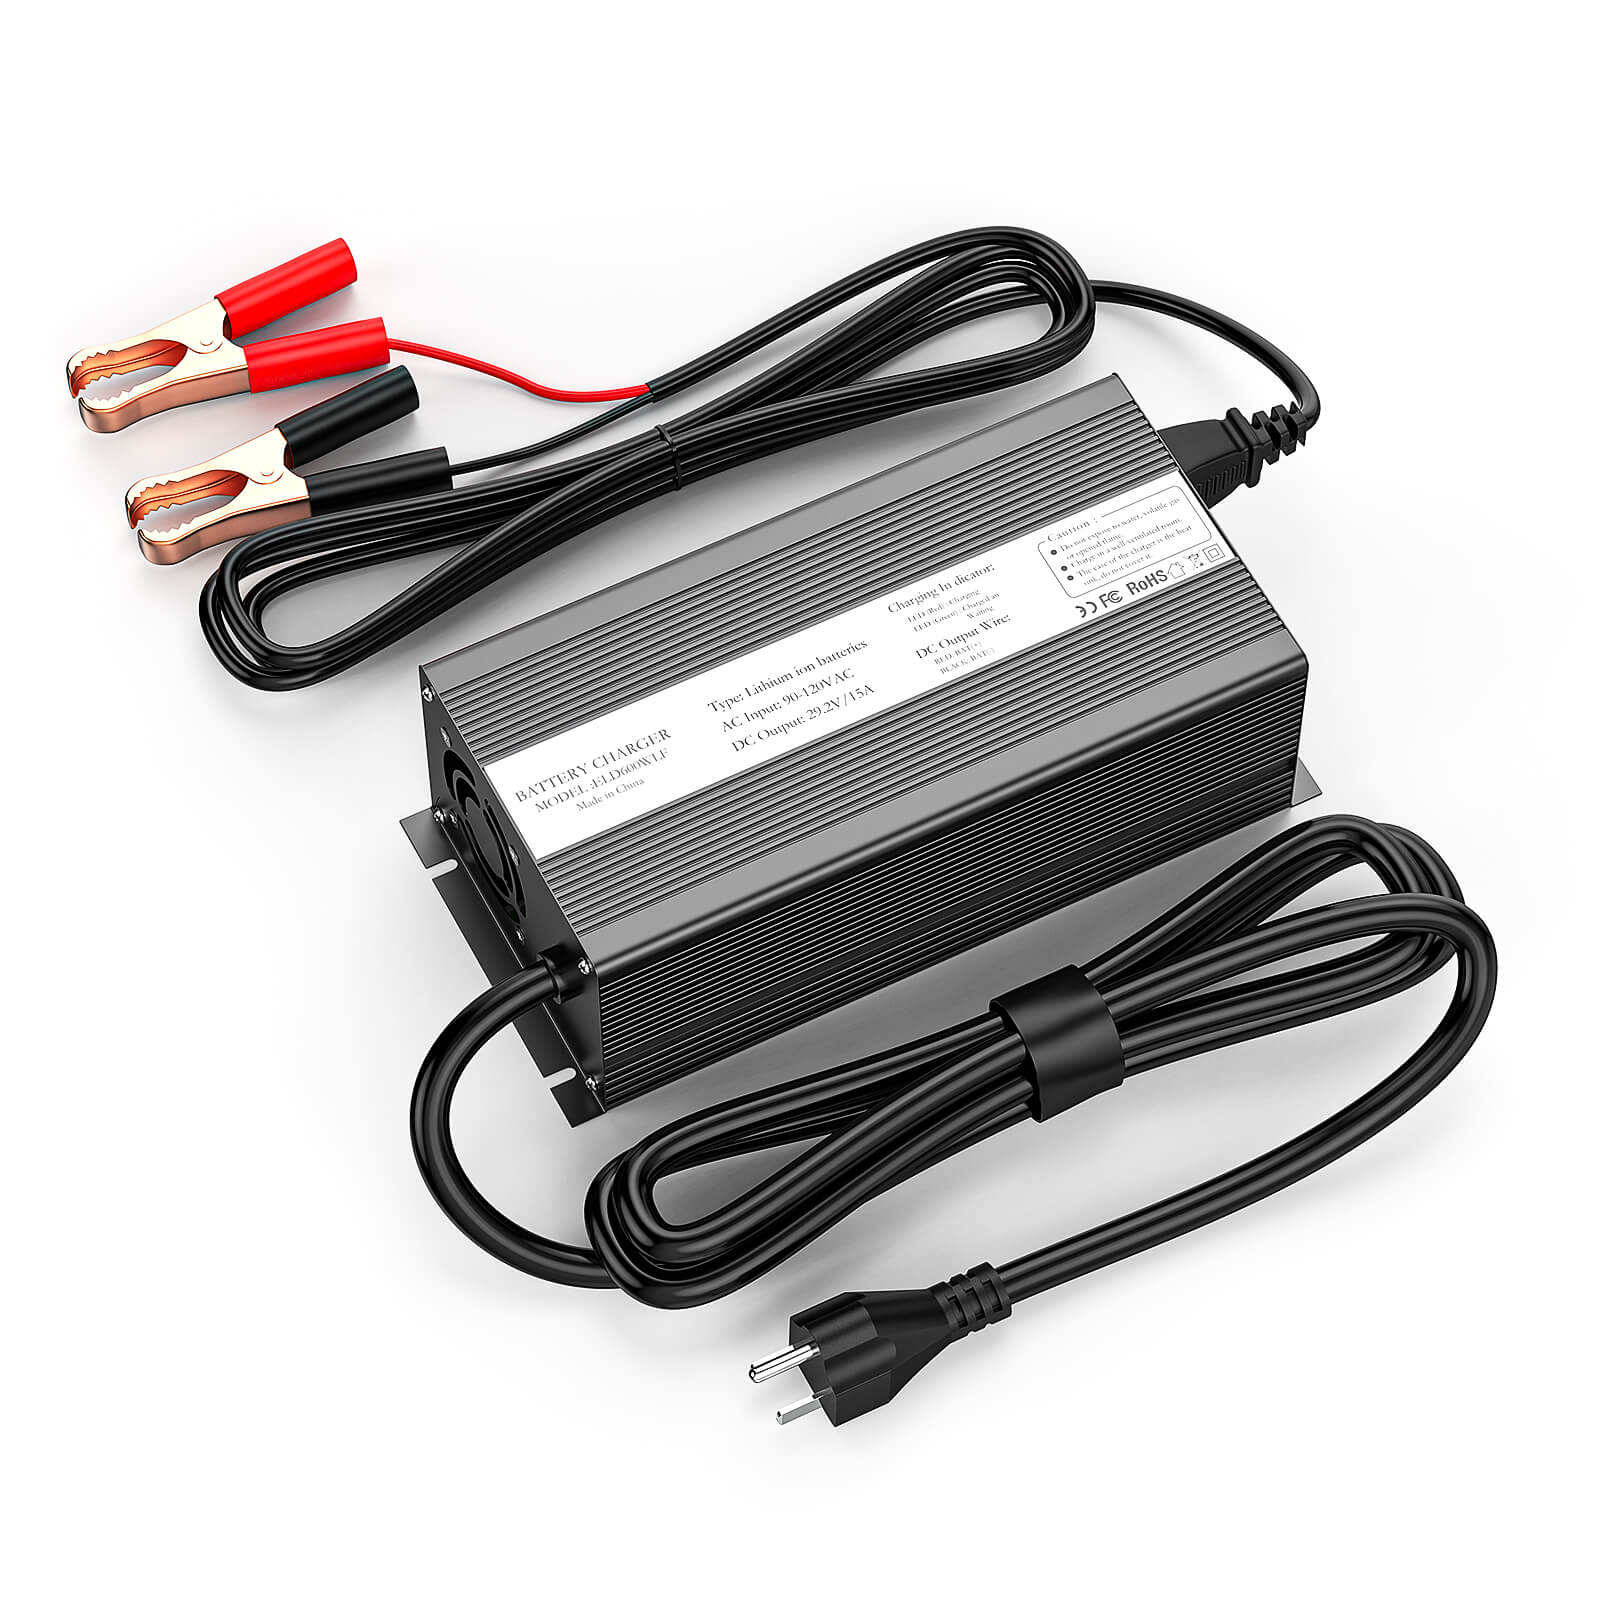 PowerUrus 12V 100AH LiFePO4 Deep Cycle Rechargeable Battery – PowerUrus  LiFePO4 Battery